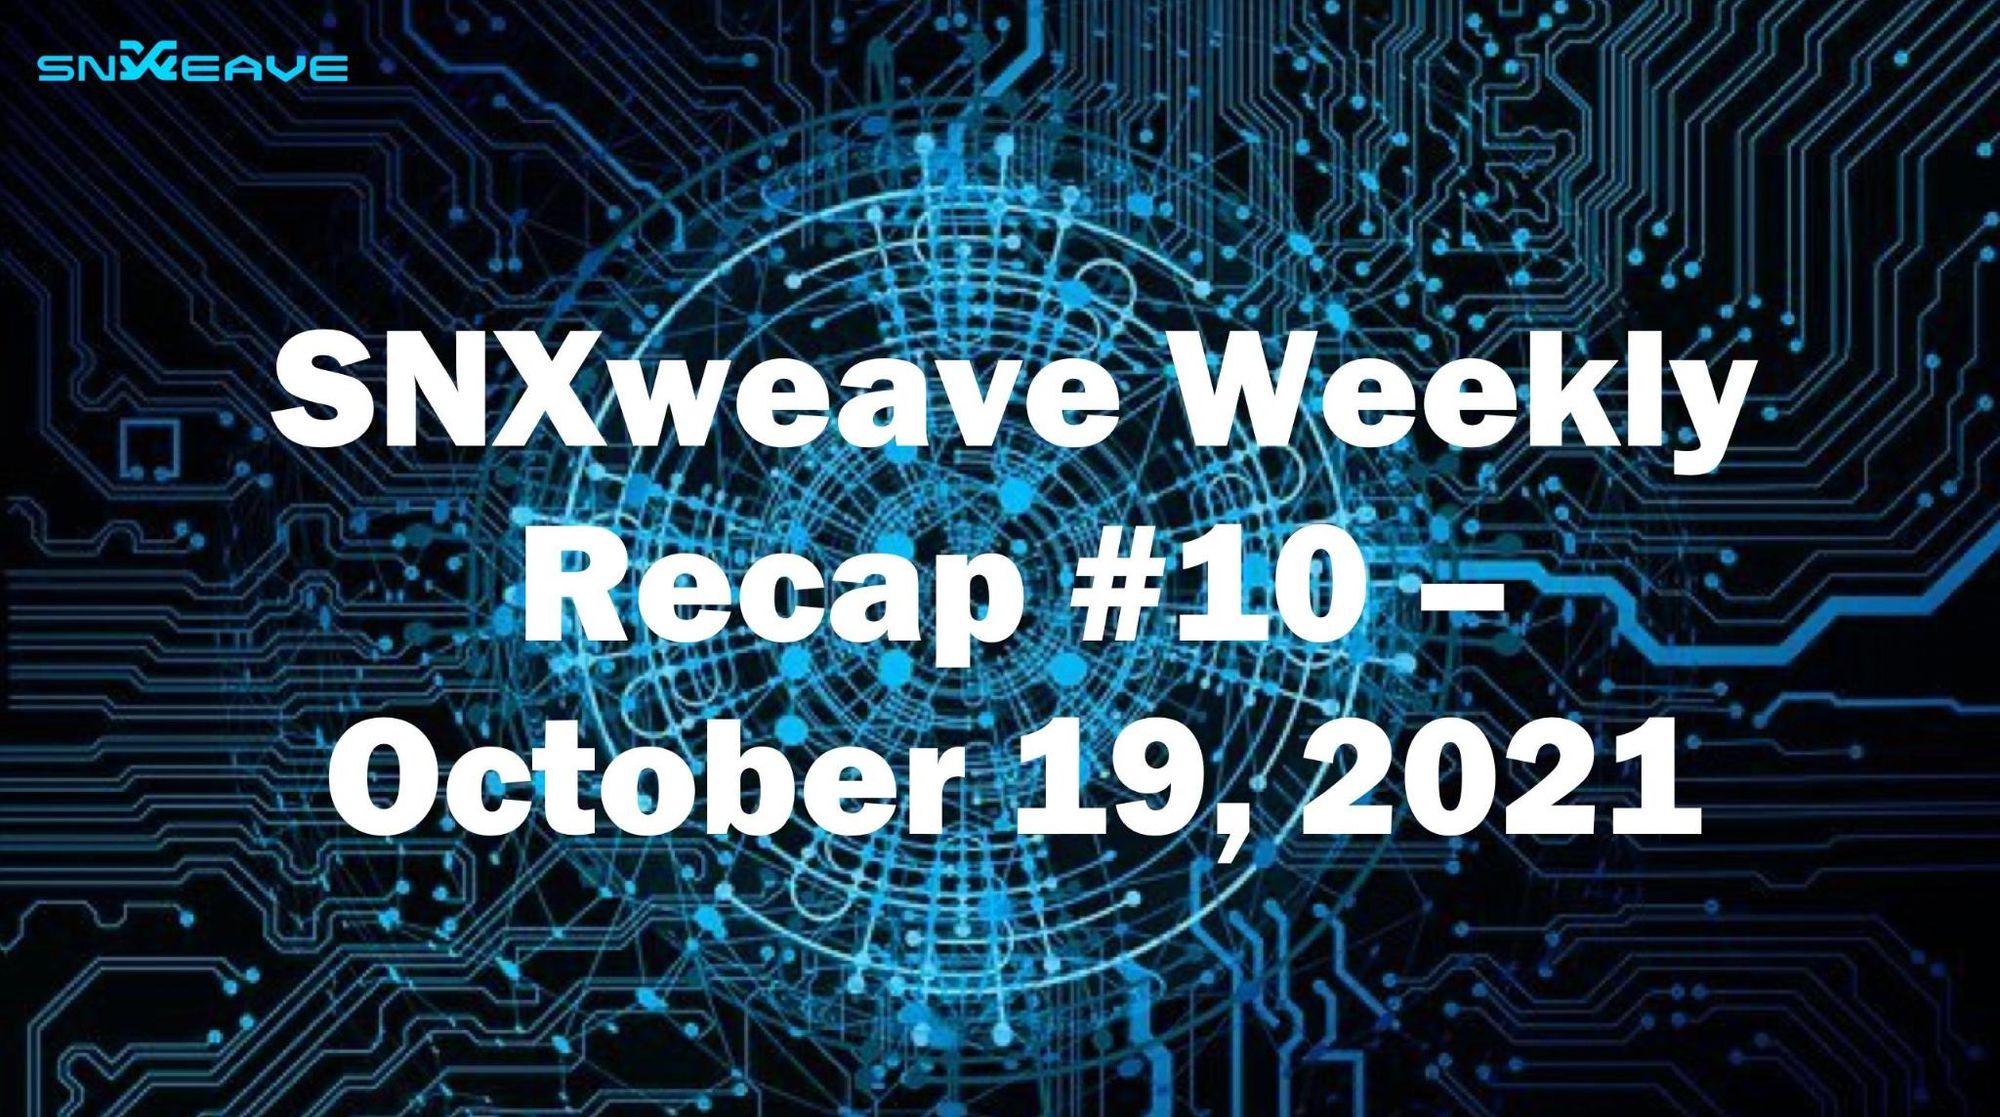 SNXweave Weekly Recap 10